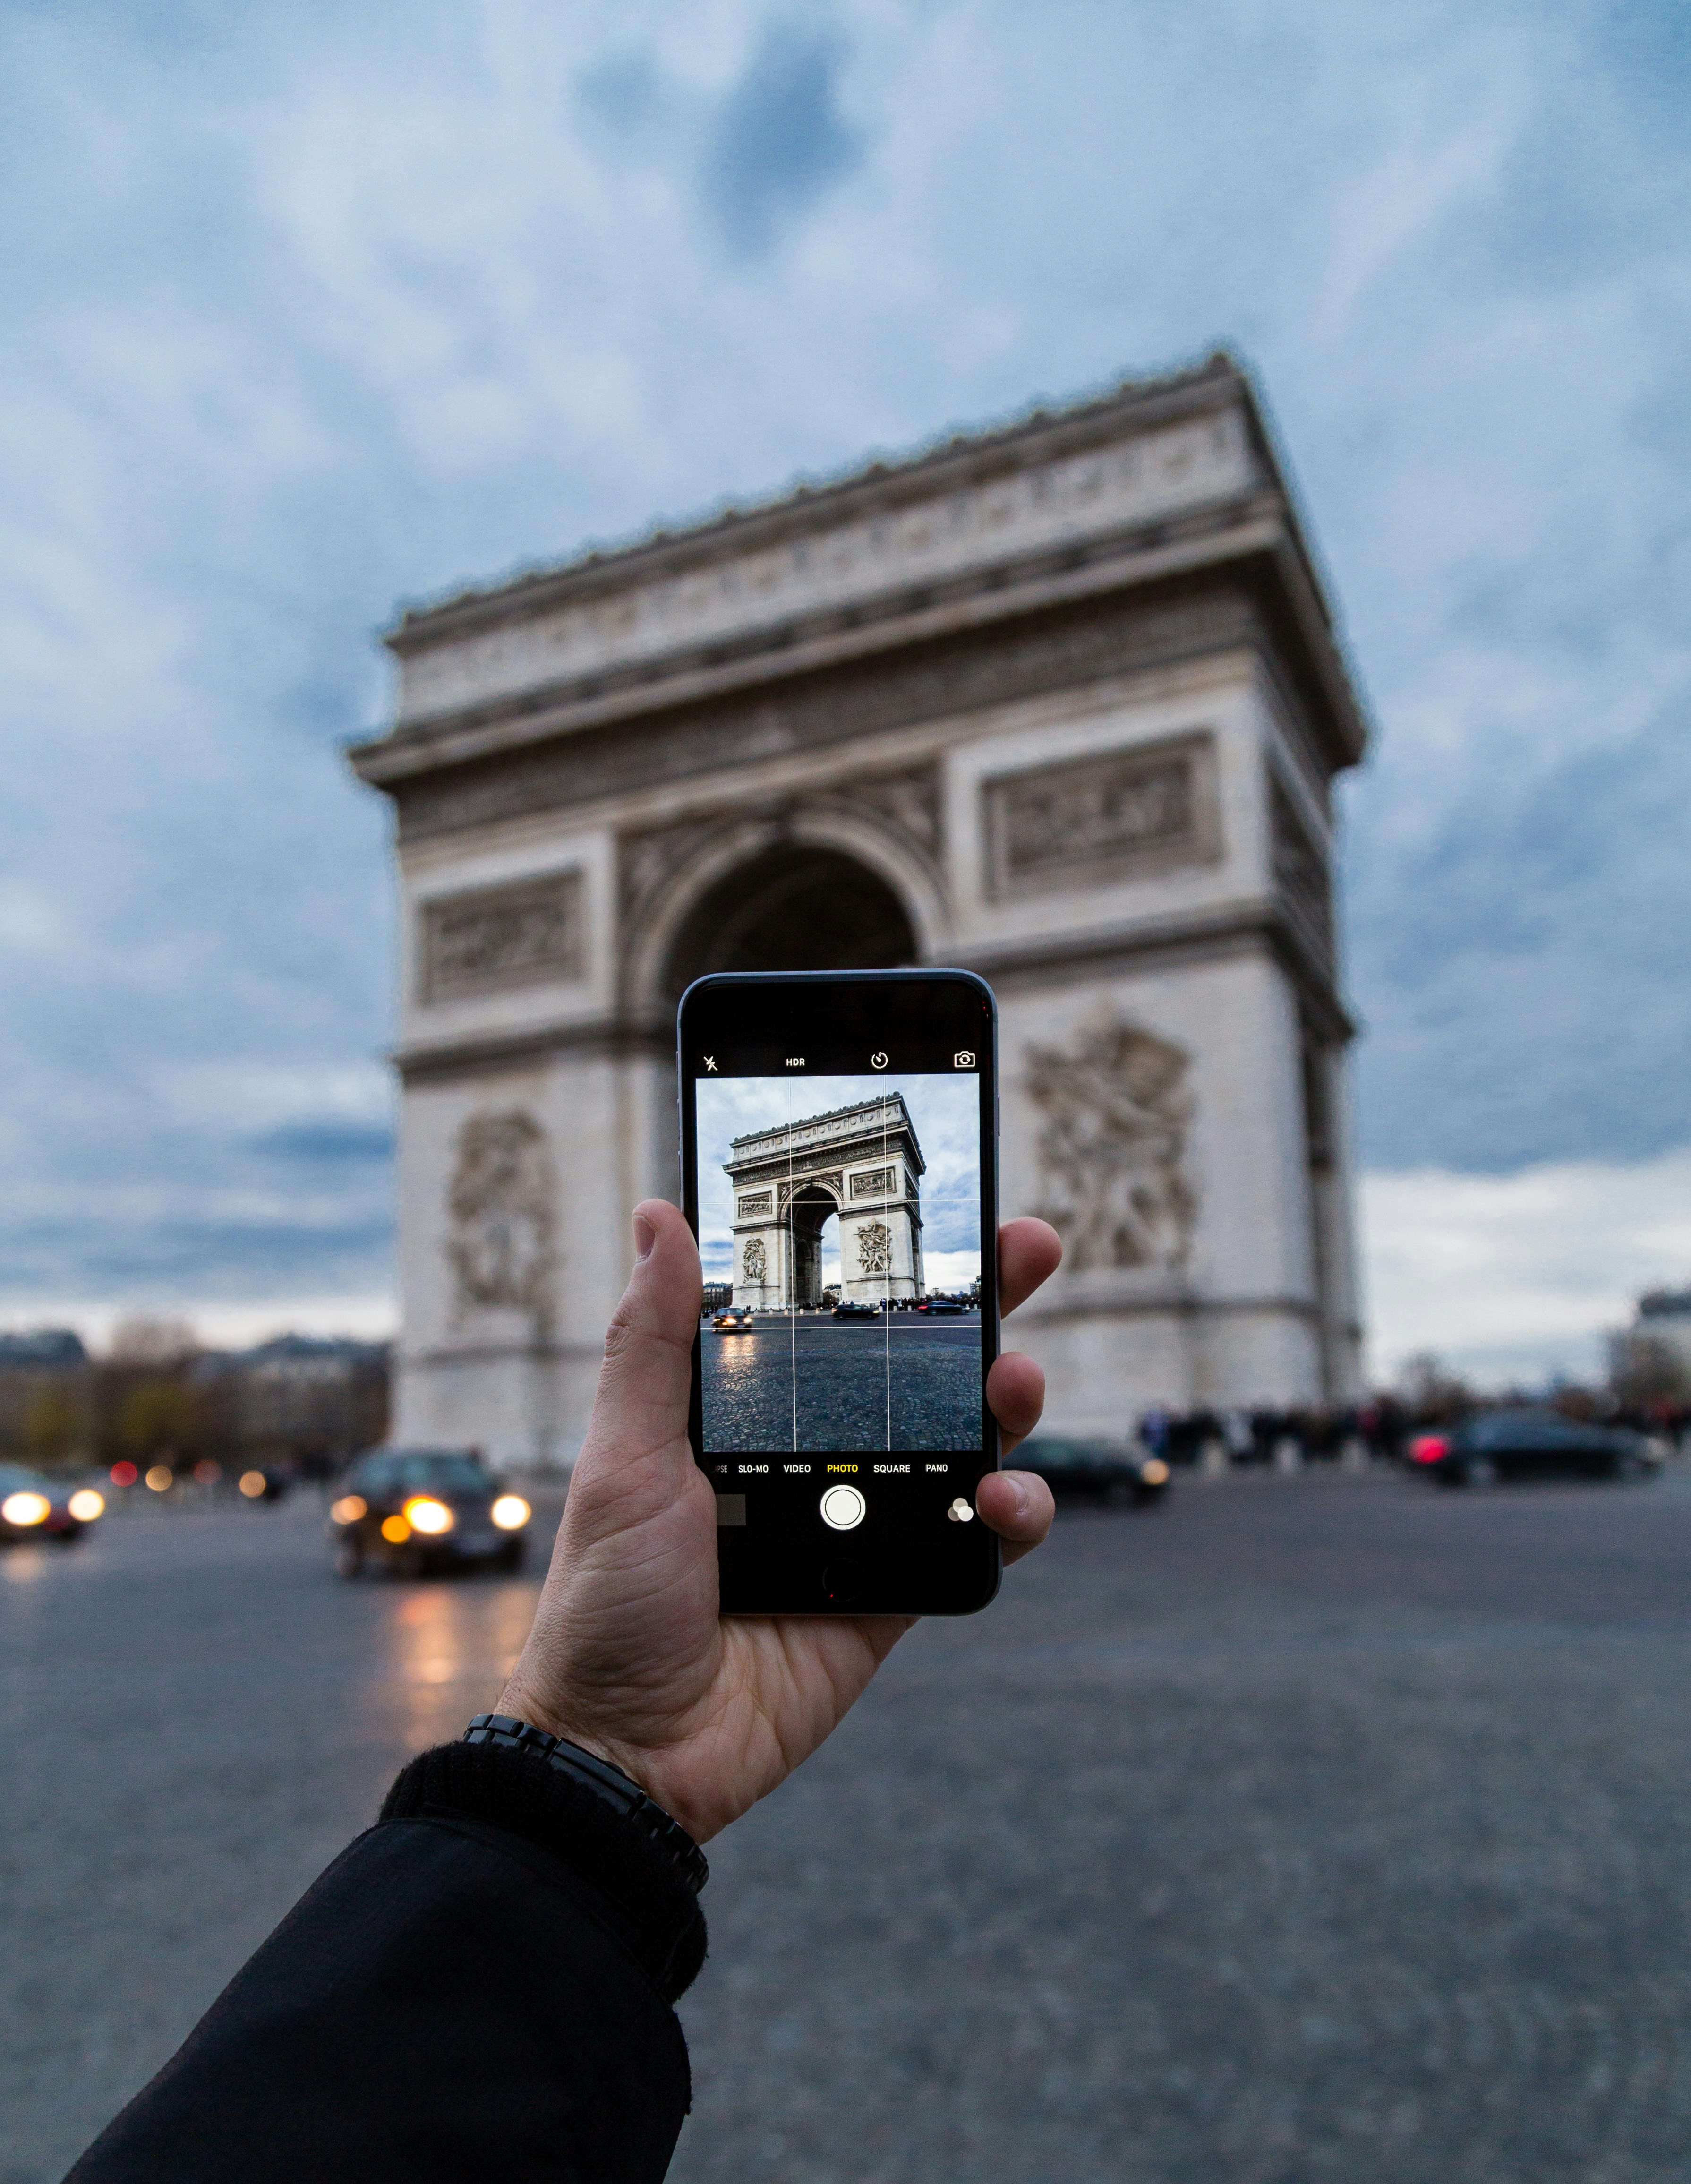 Taking photo of Eiffel Tower